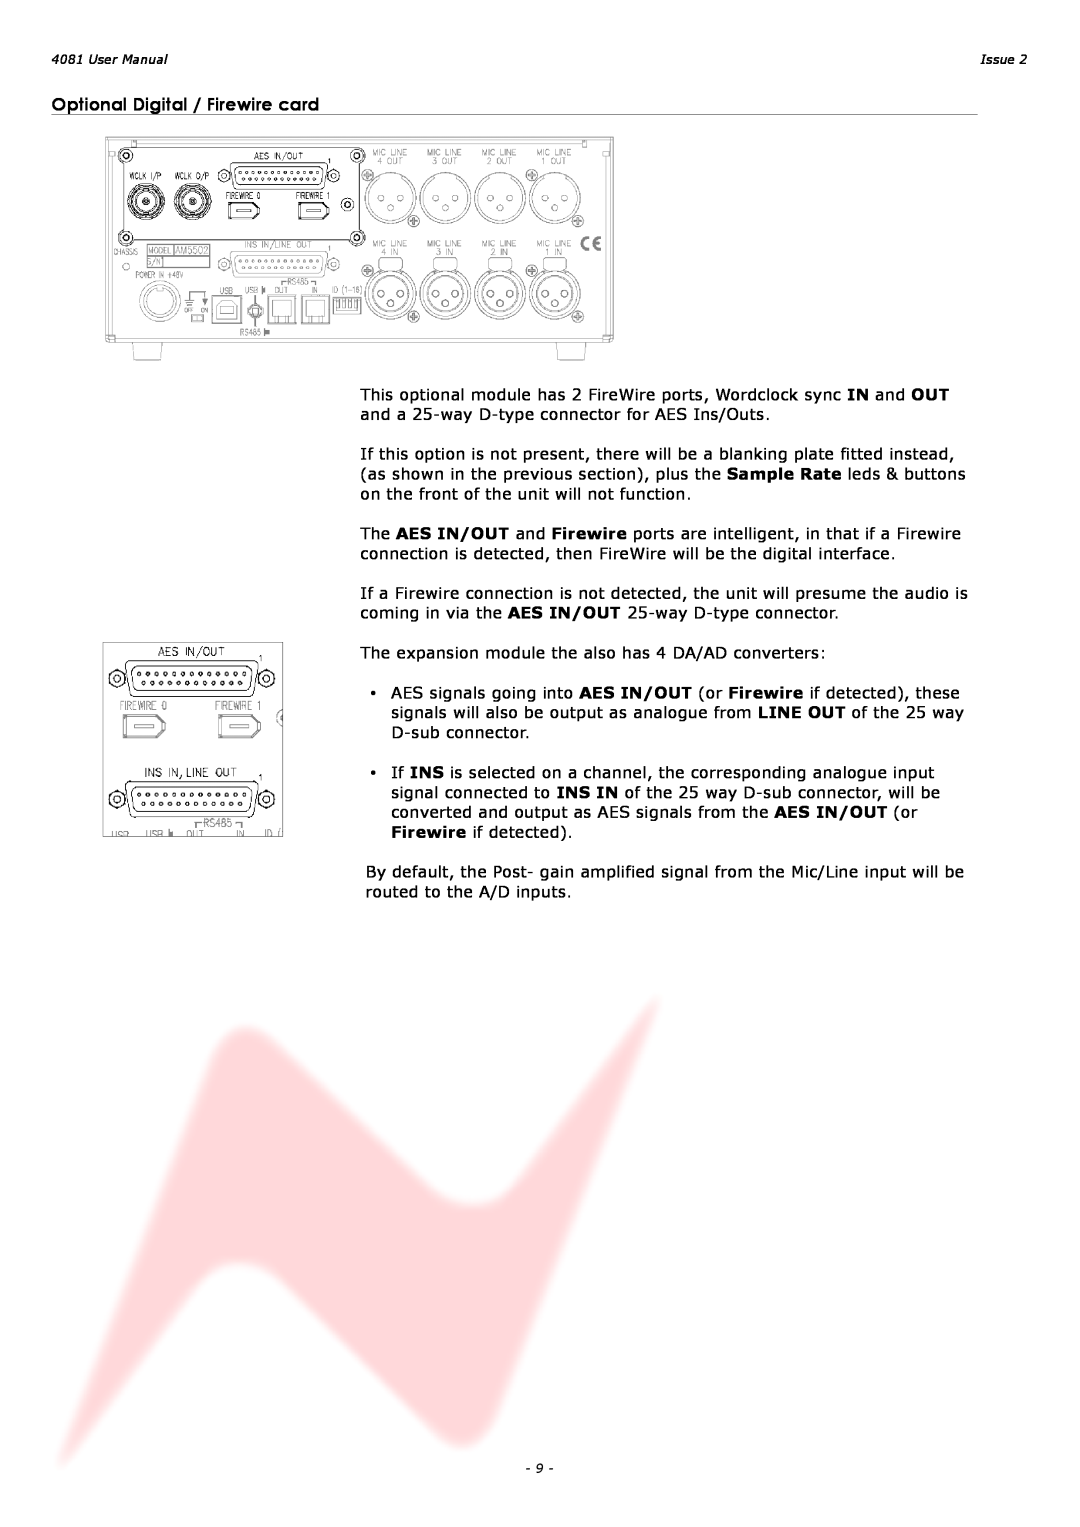 AMS 4081 user manual Optional Digital / Firewire card, Issue 